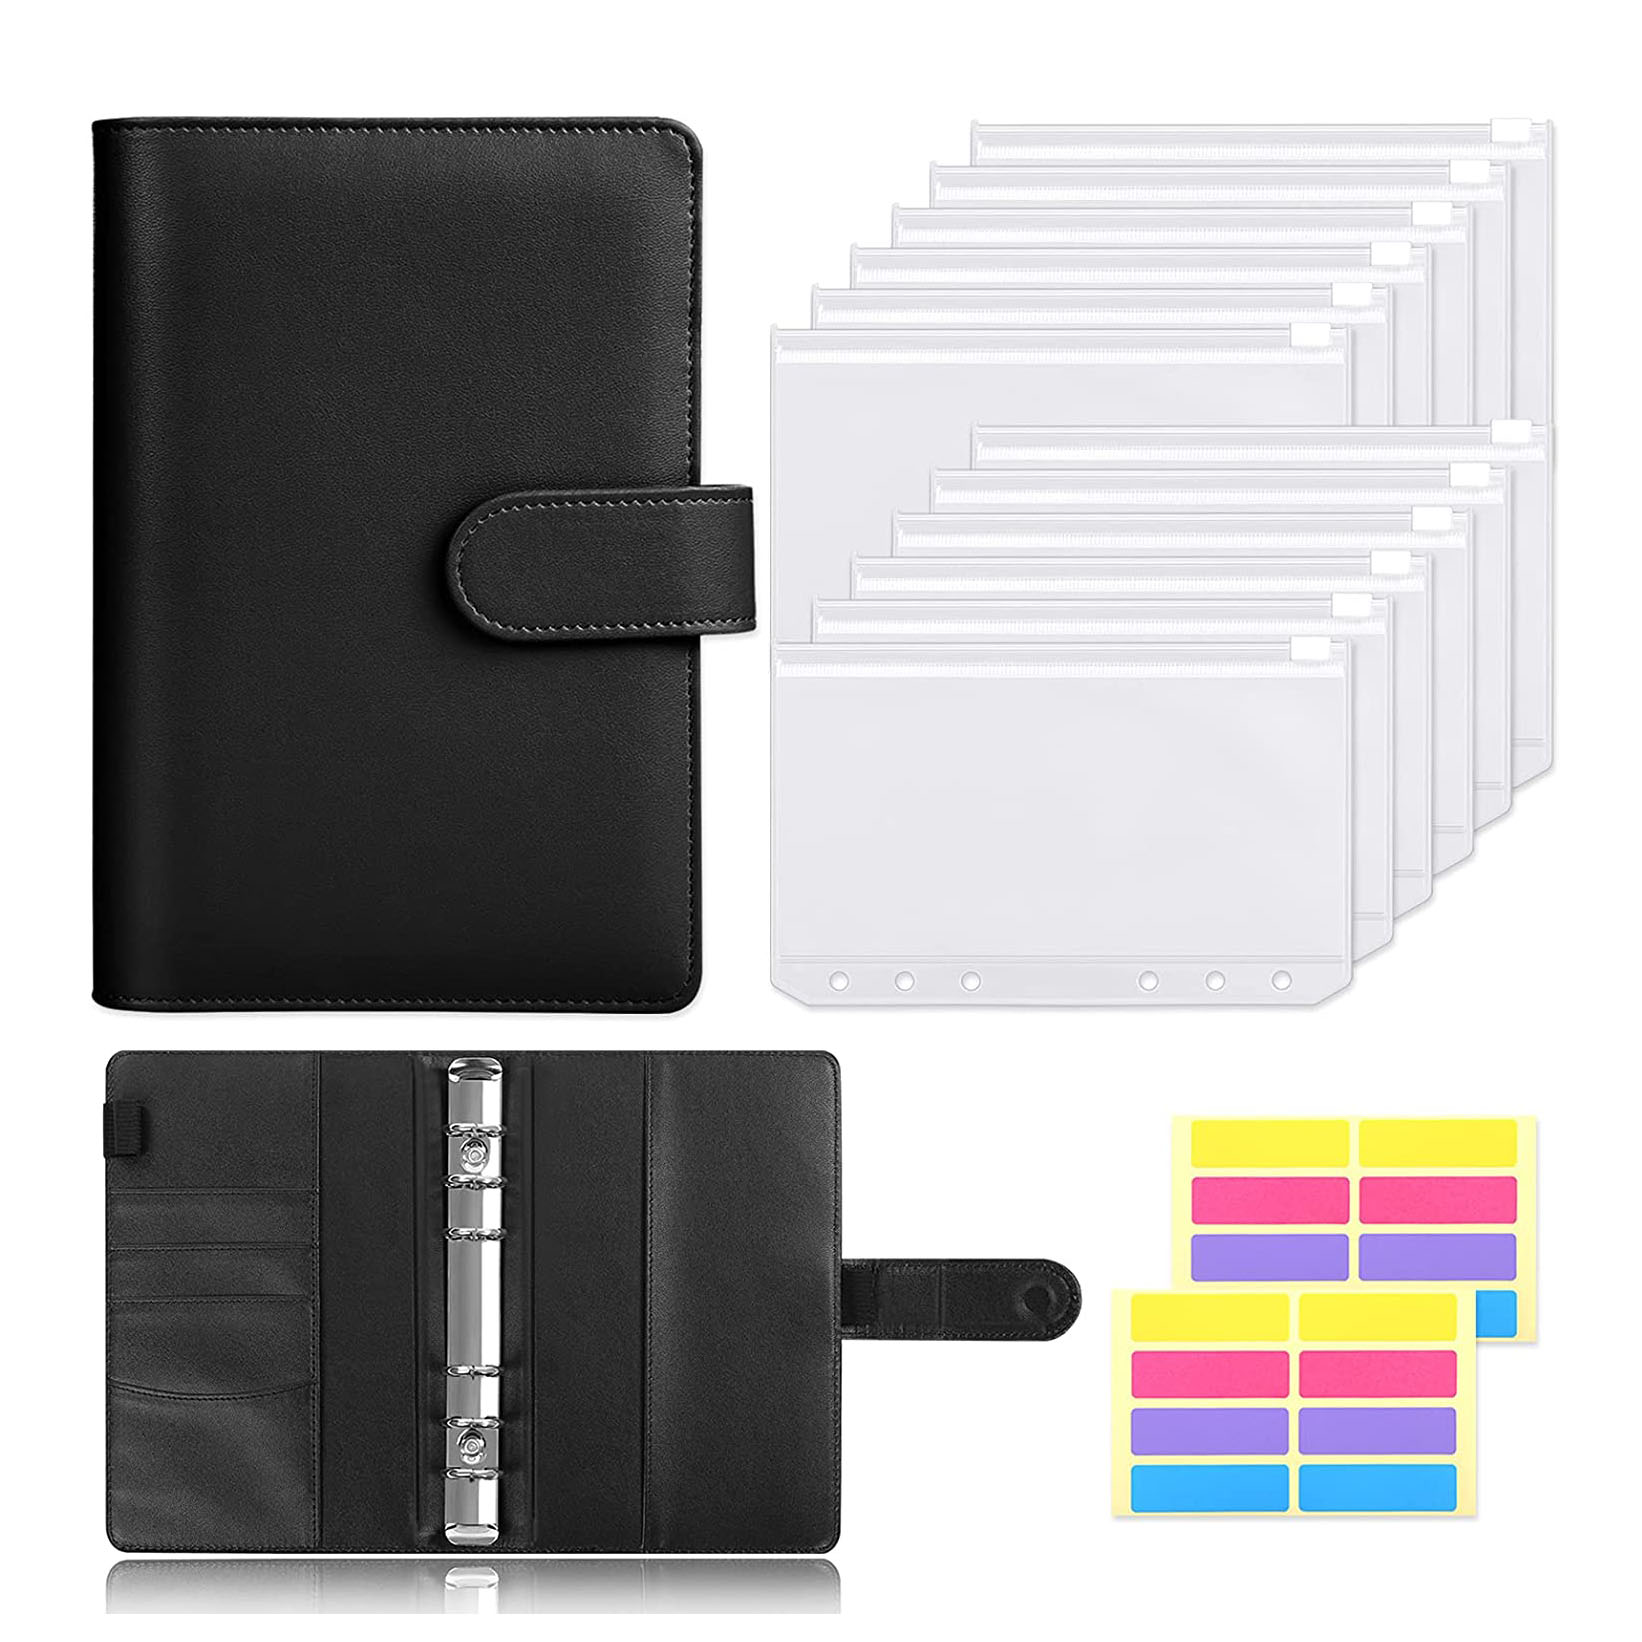 A6 PU Leather Binder Budget Cash Envelopes System Planner Organizer12pcs Binder Clear Zipper Pockets and Label Stickers